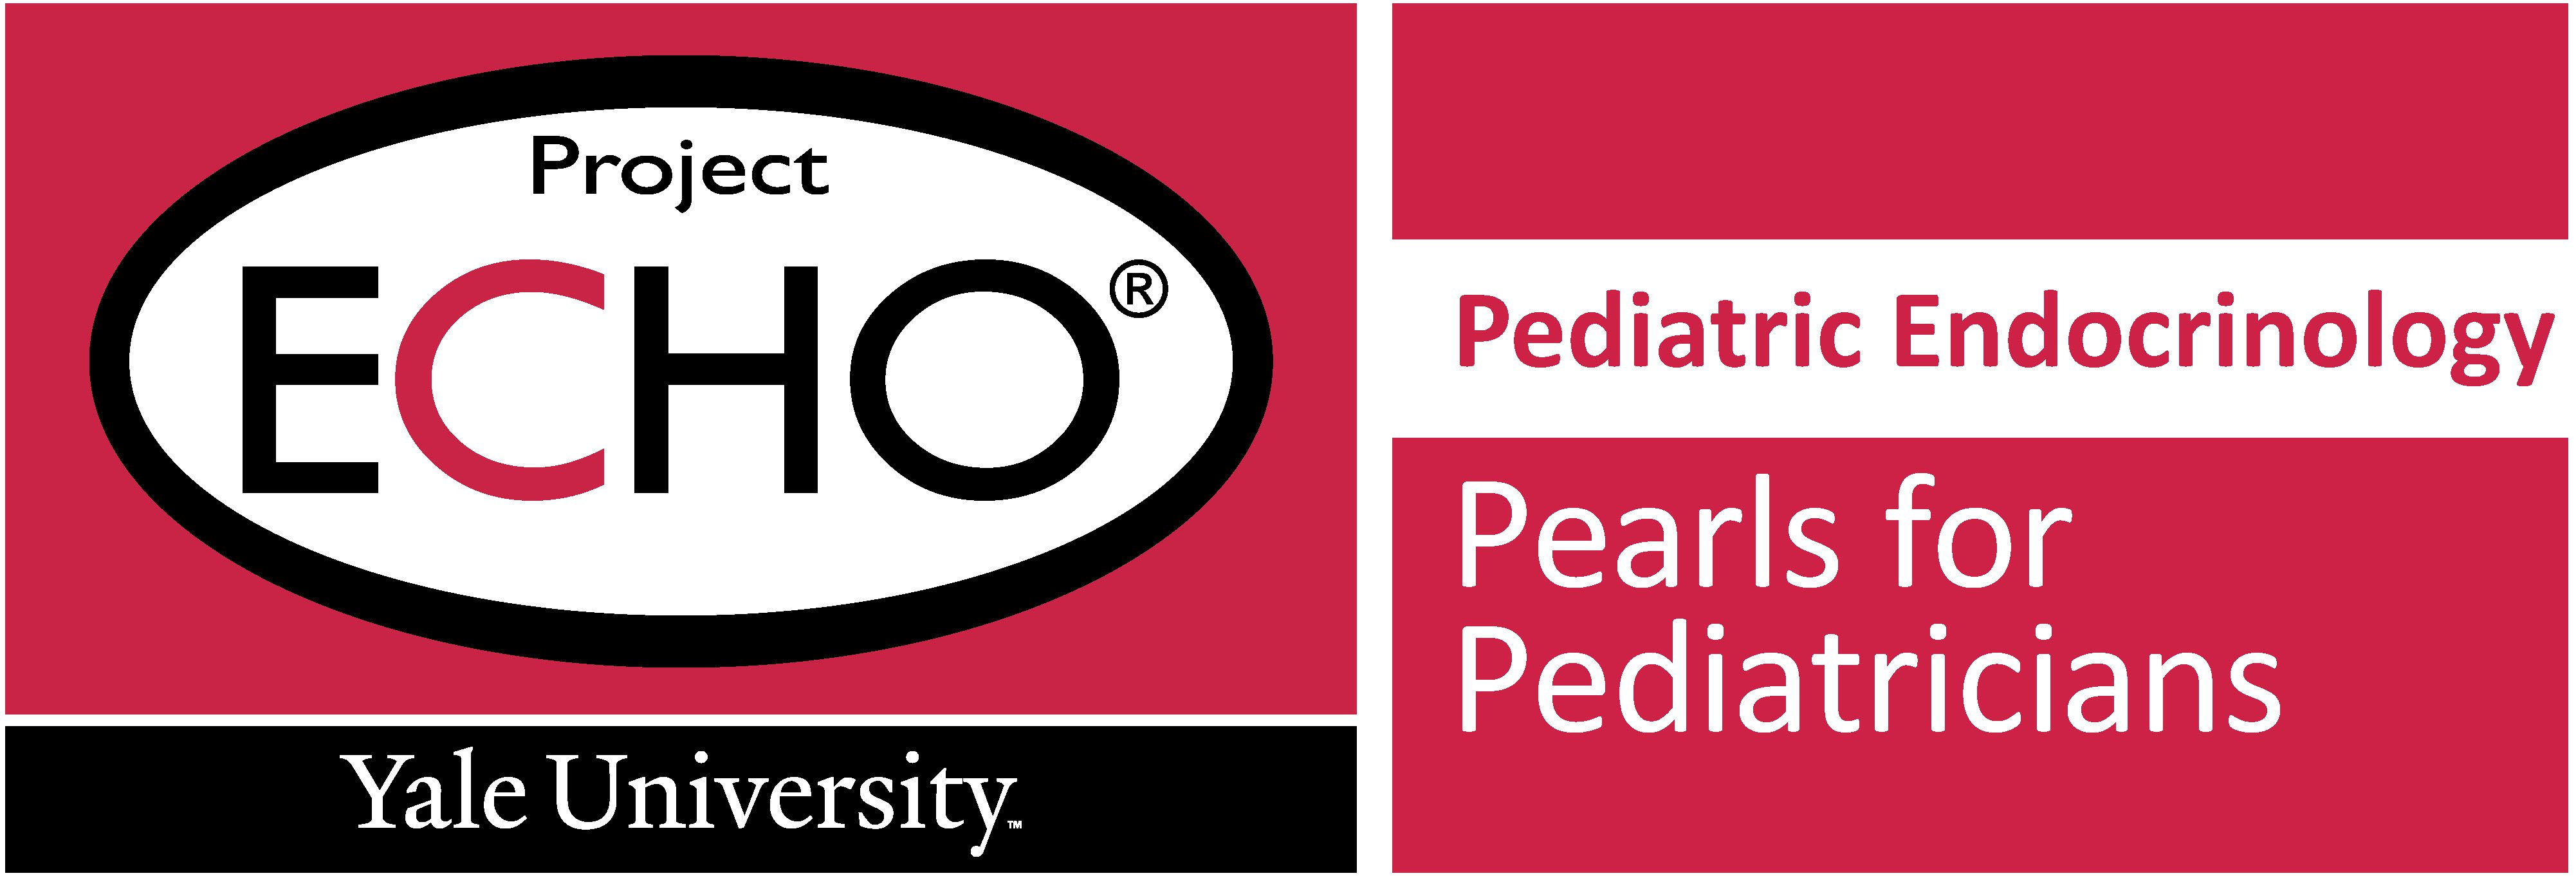 Pediatric Endocrinology_ECHO logo